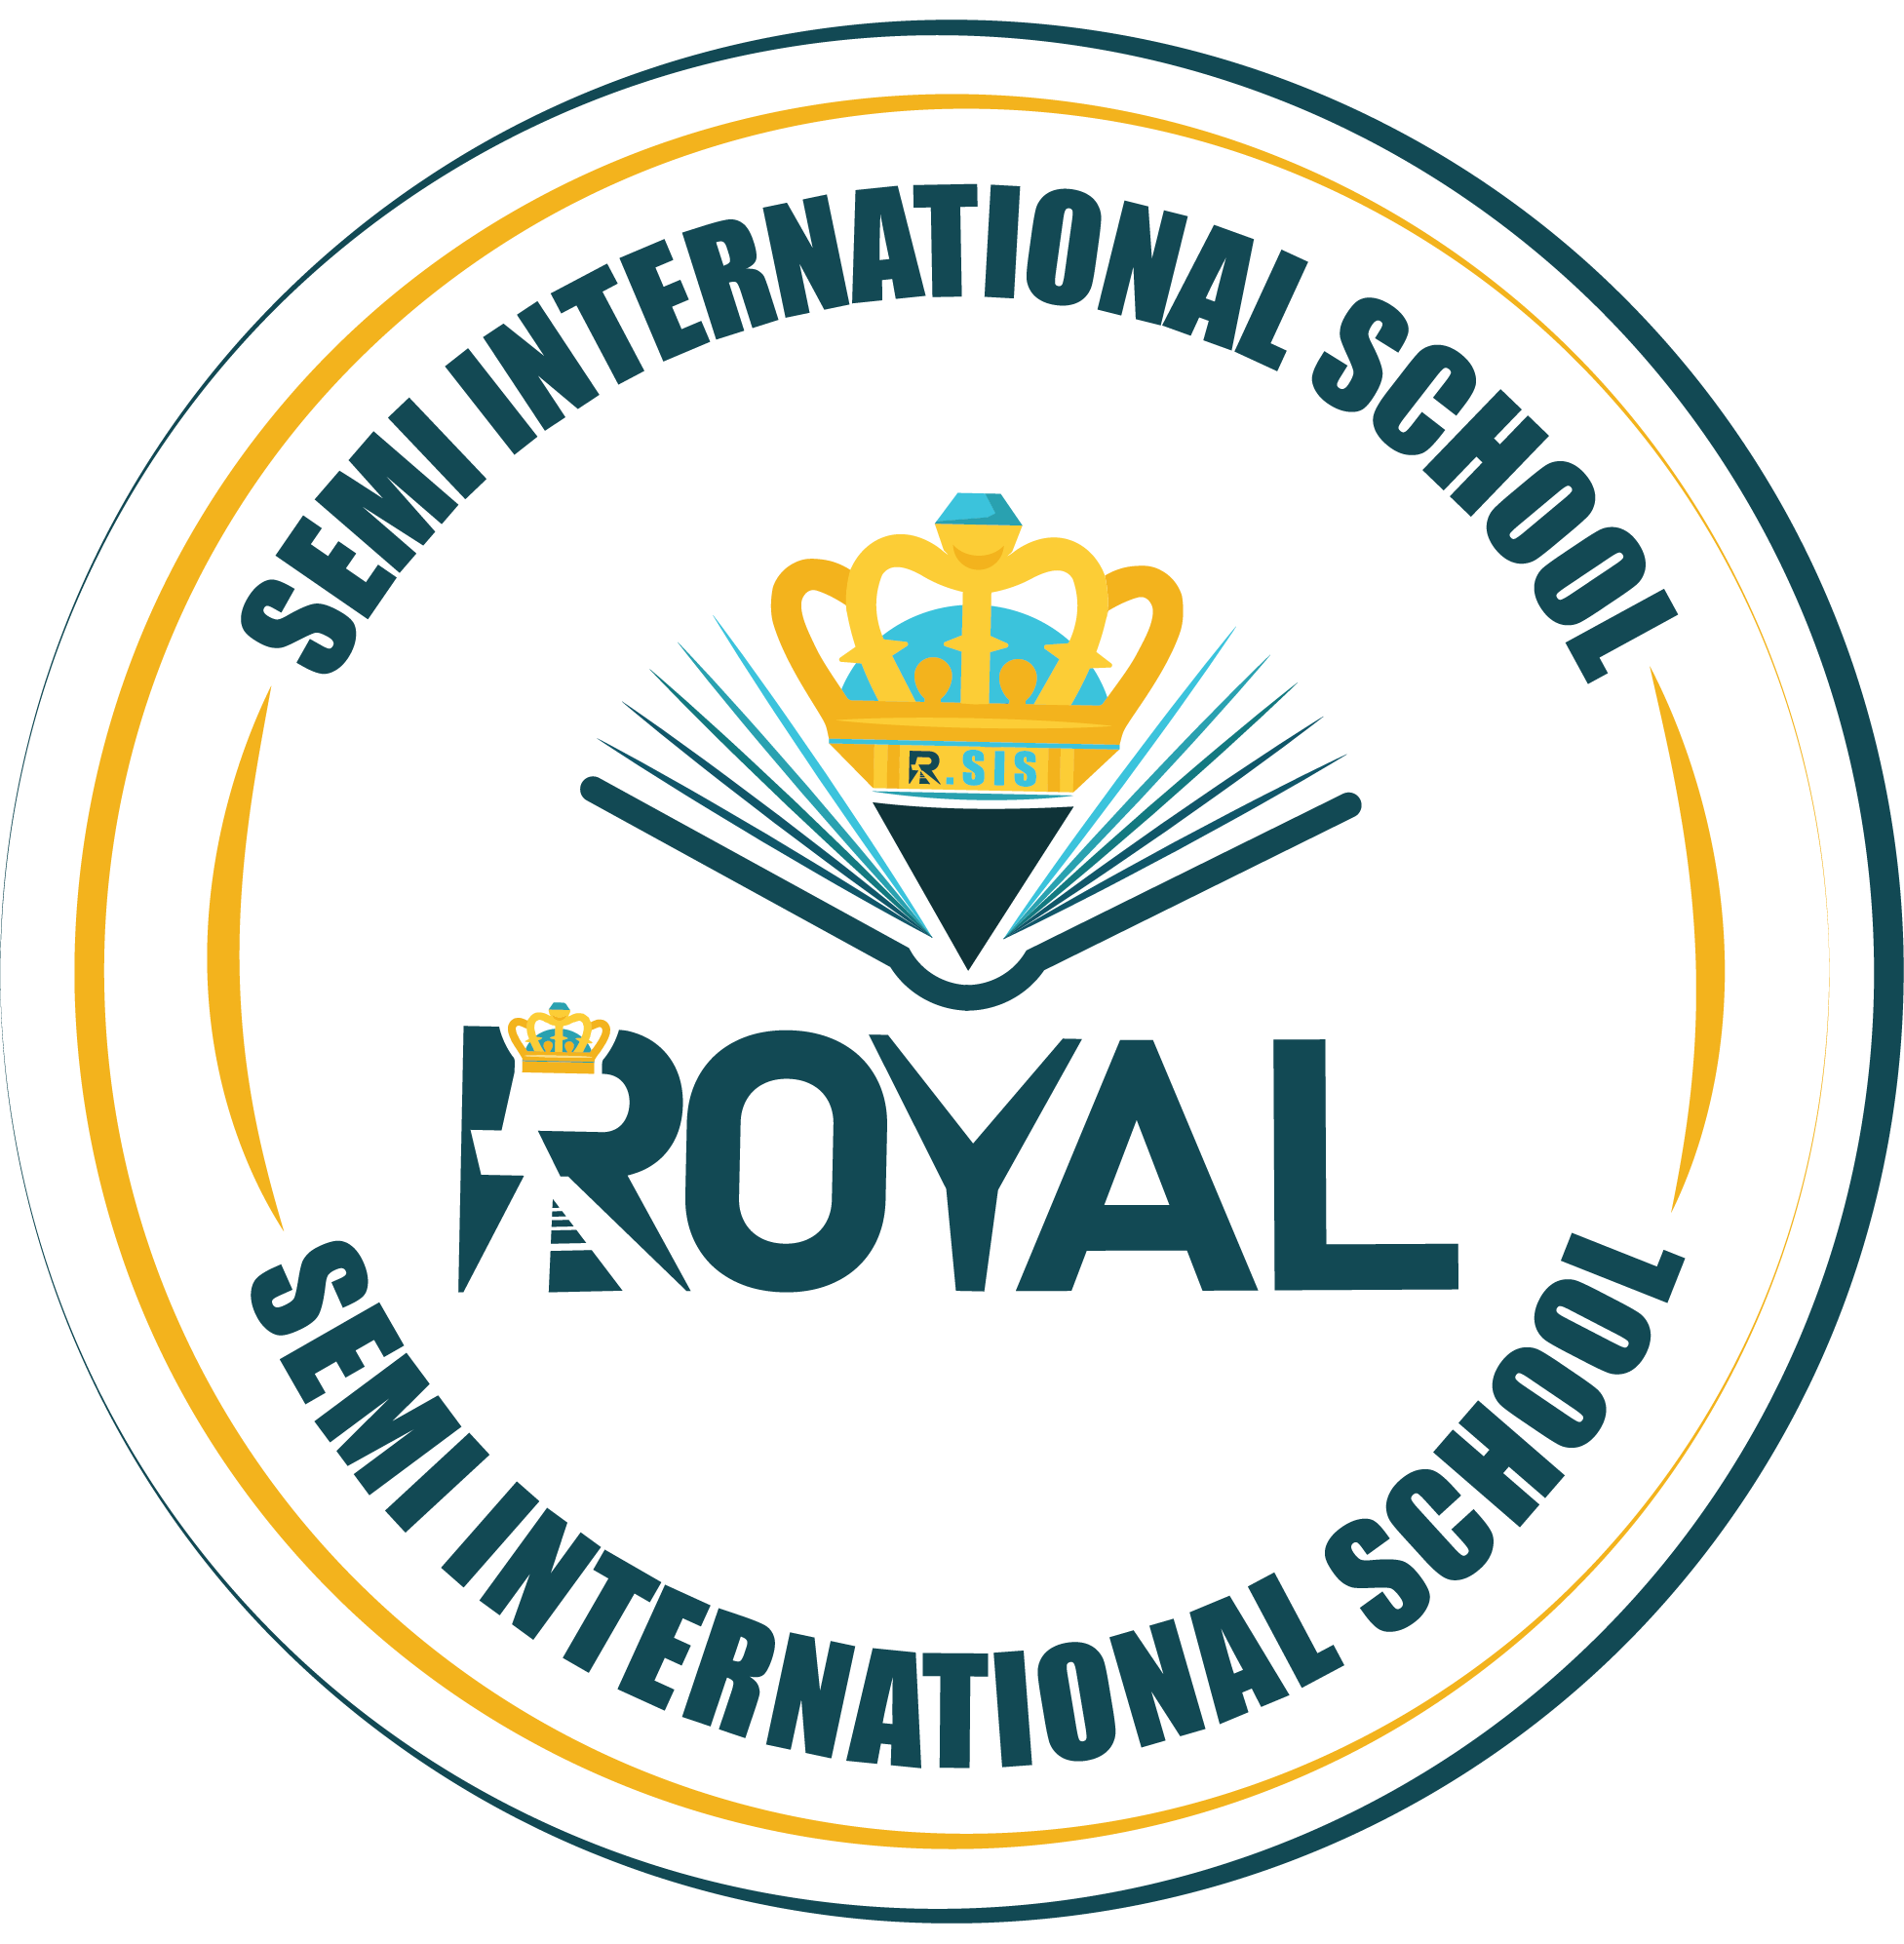 ROYAL - Semi International School